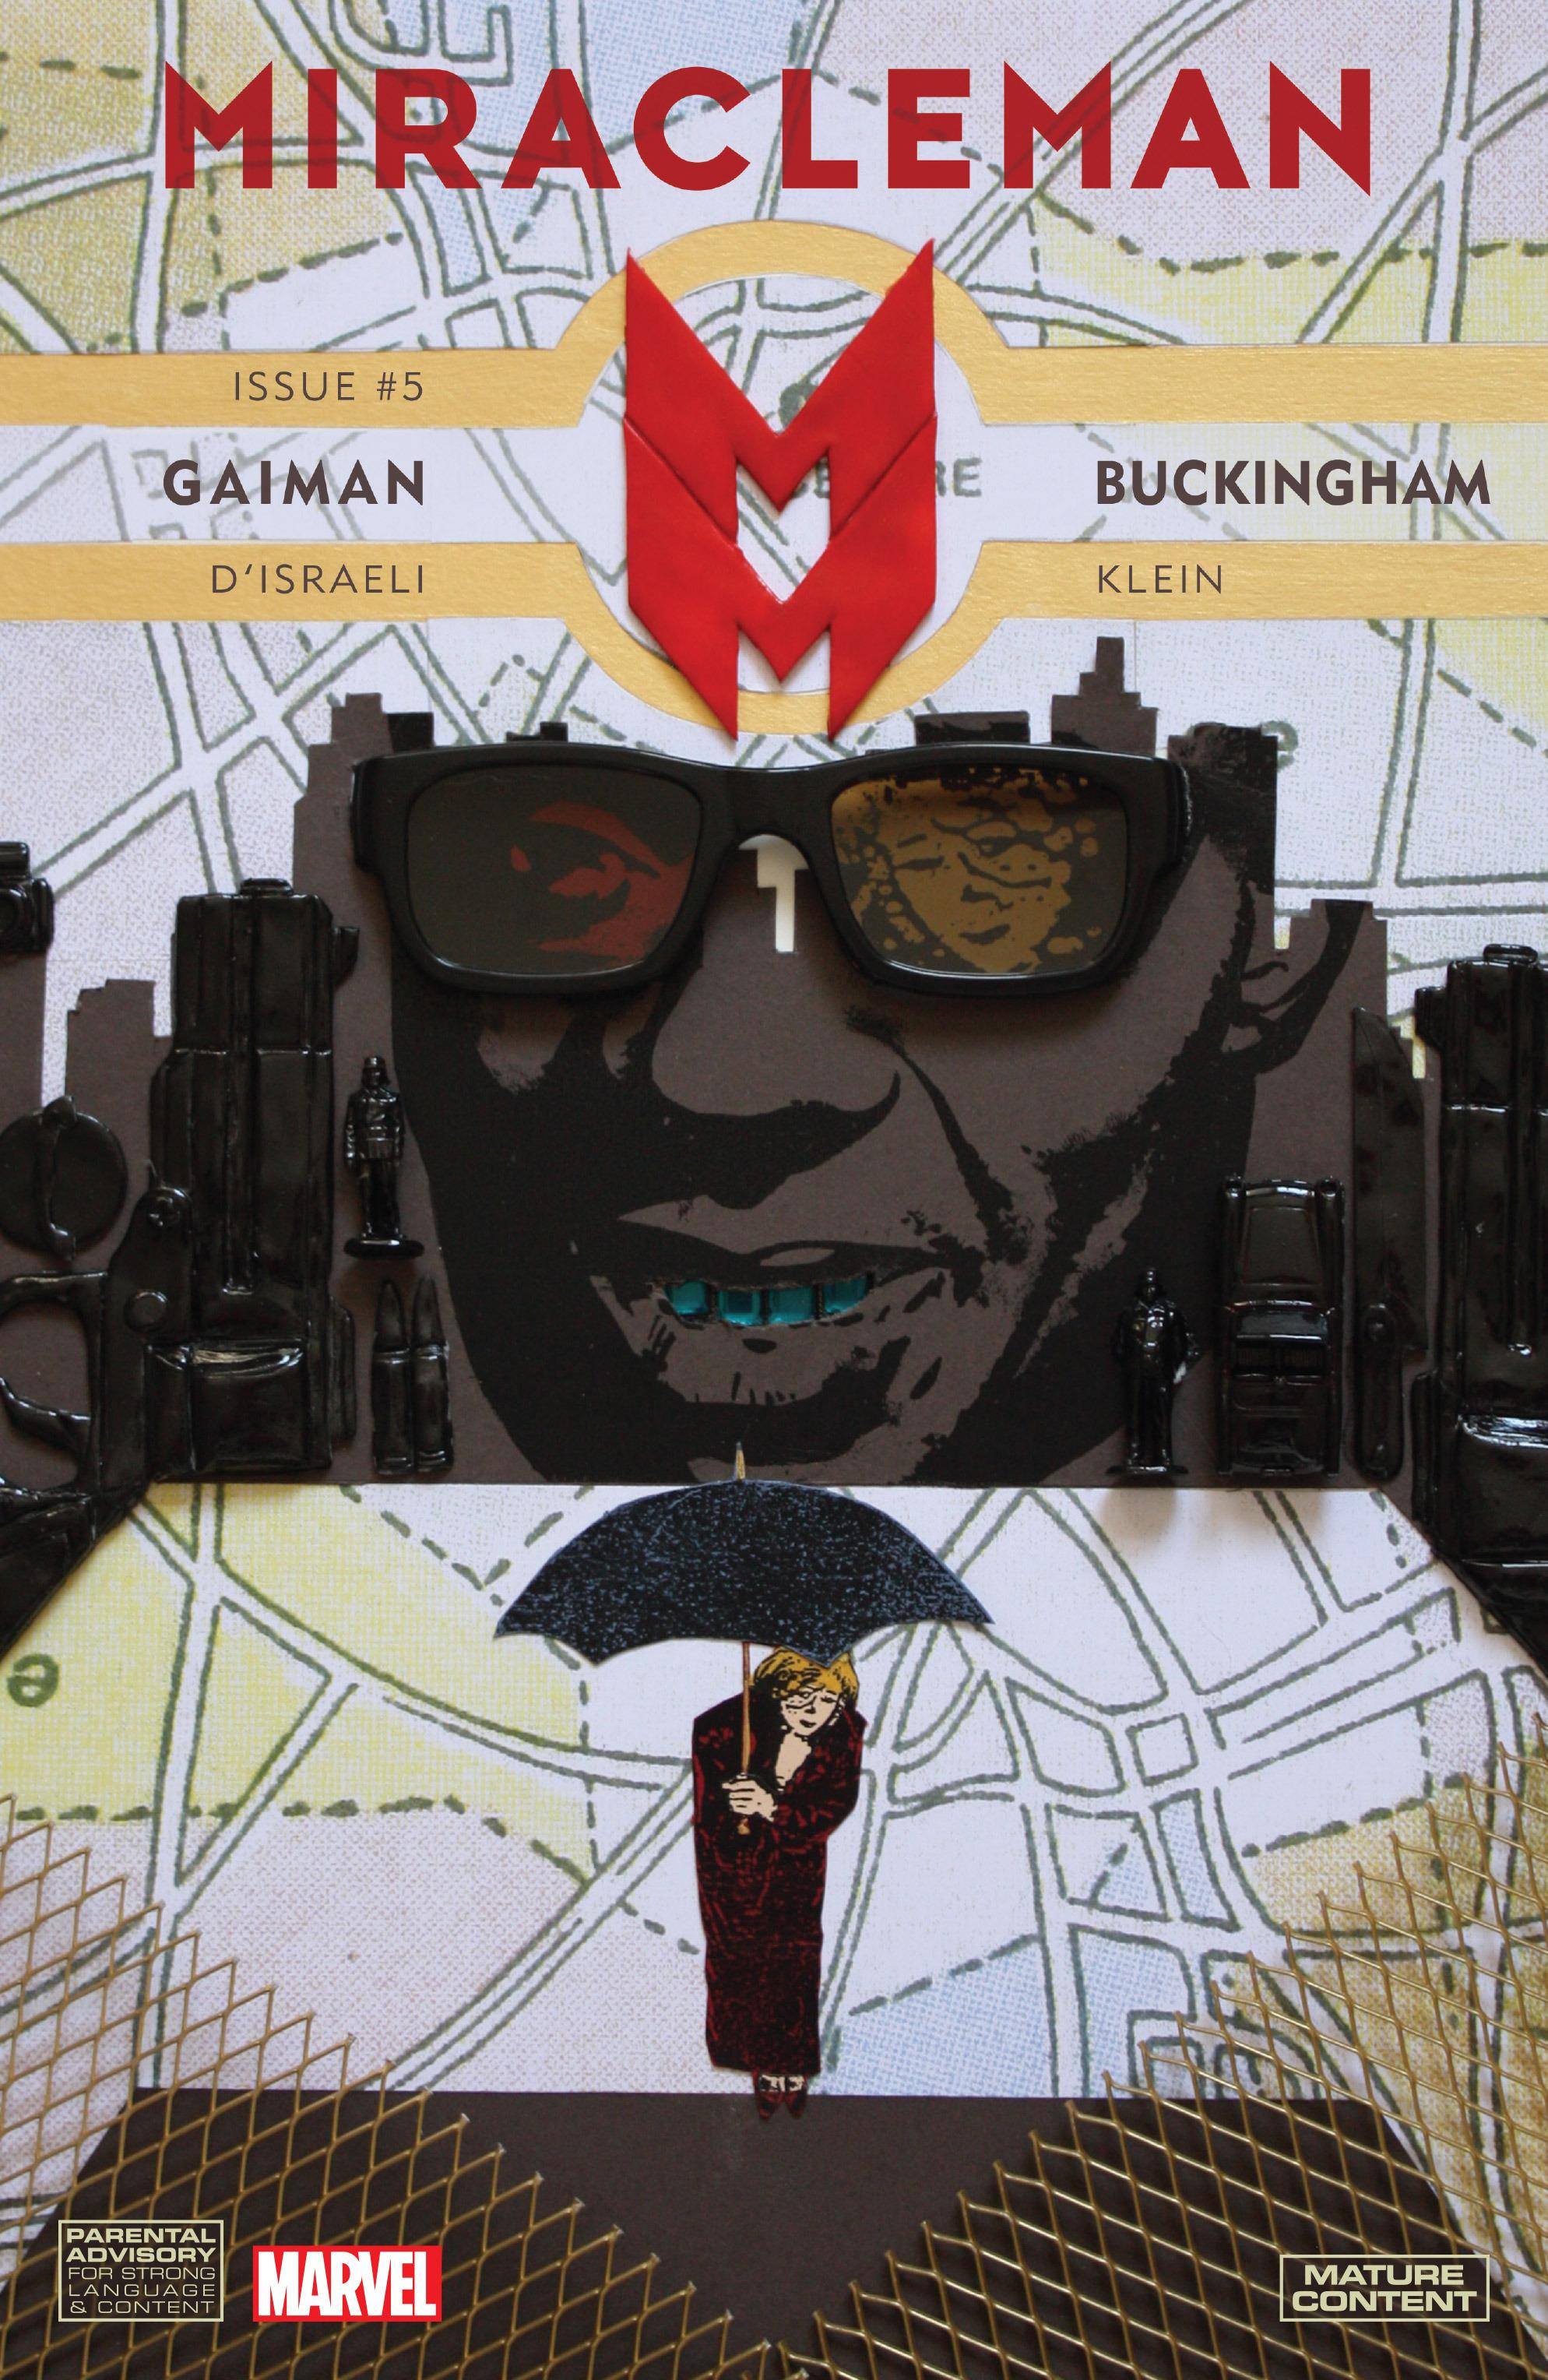 Miracleman by Gaiman & Buckingham Vol. 1 #5